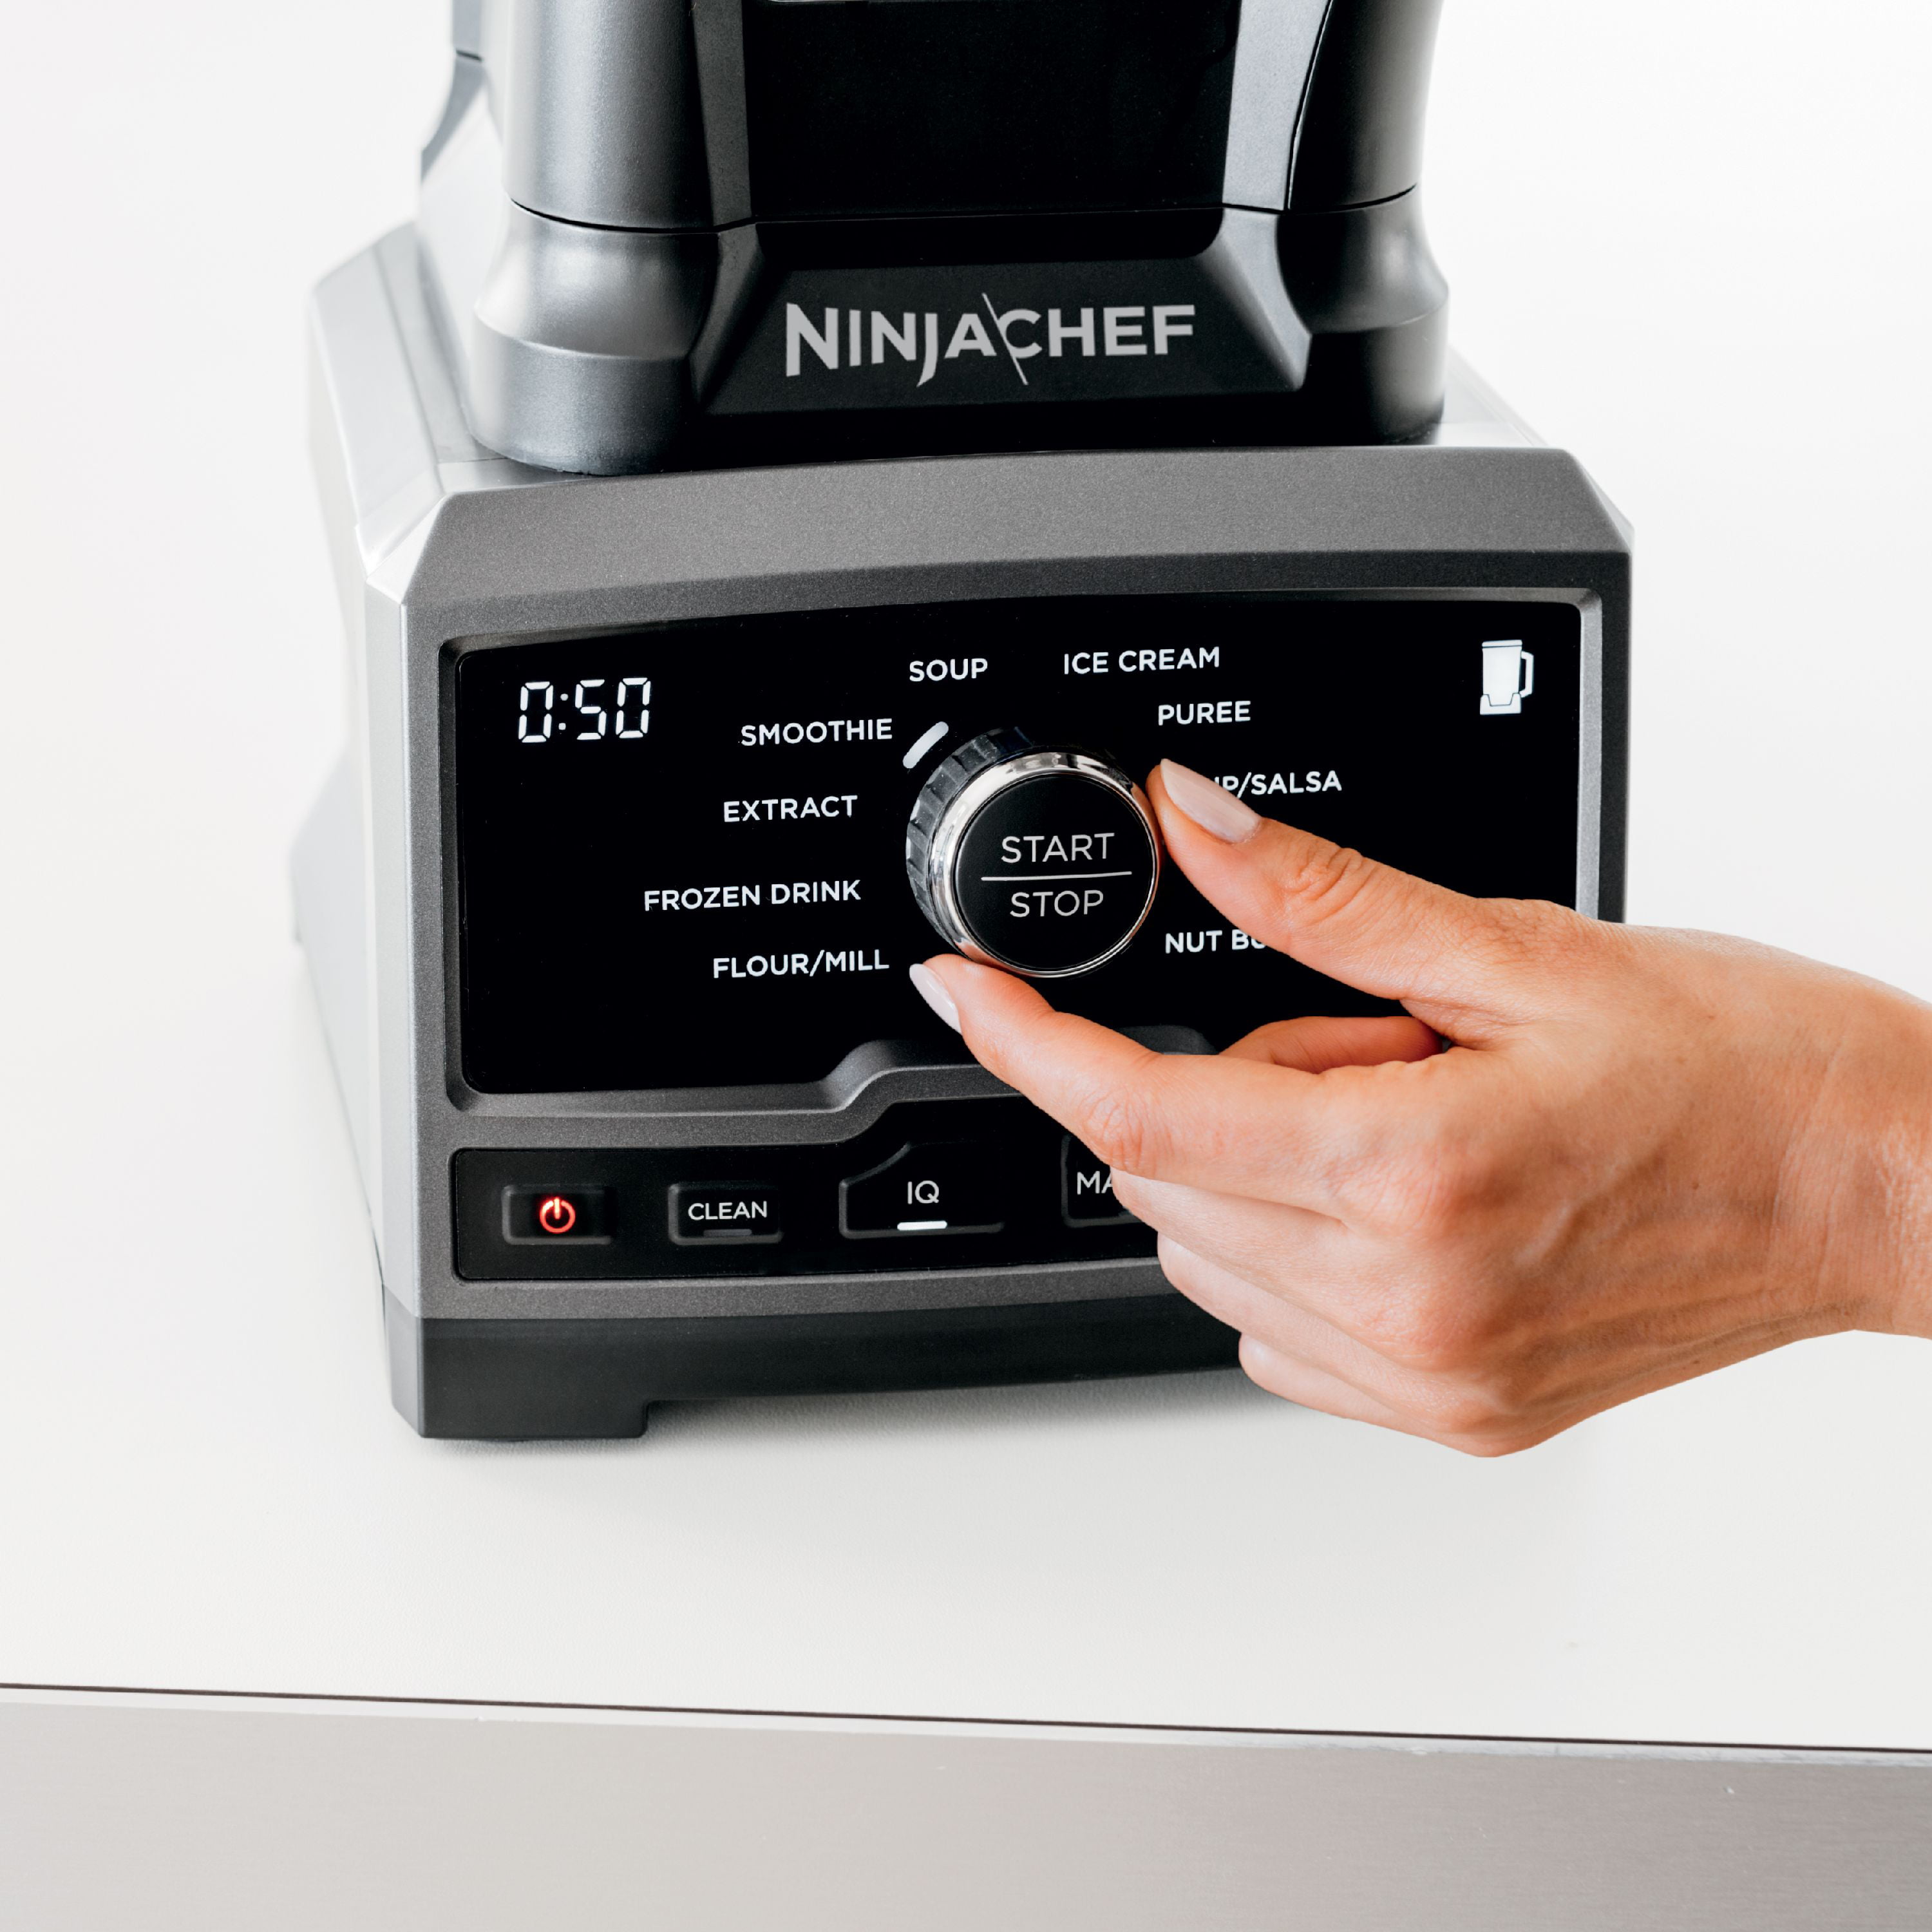 Ninja Chef High-Speed Blender Review